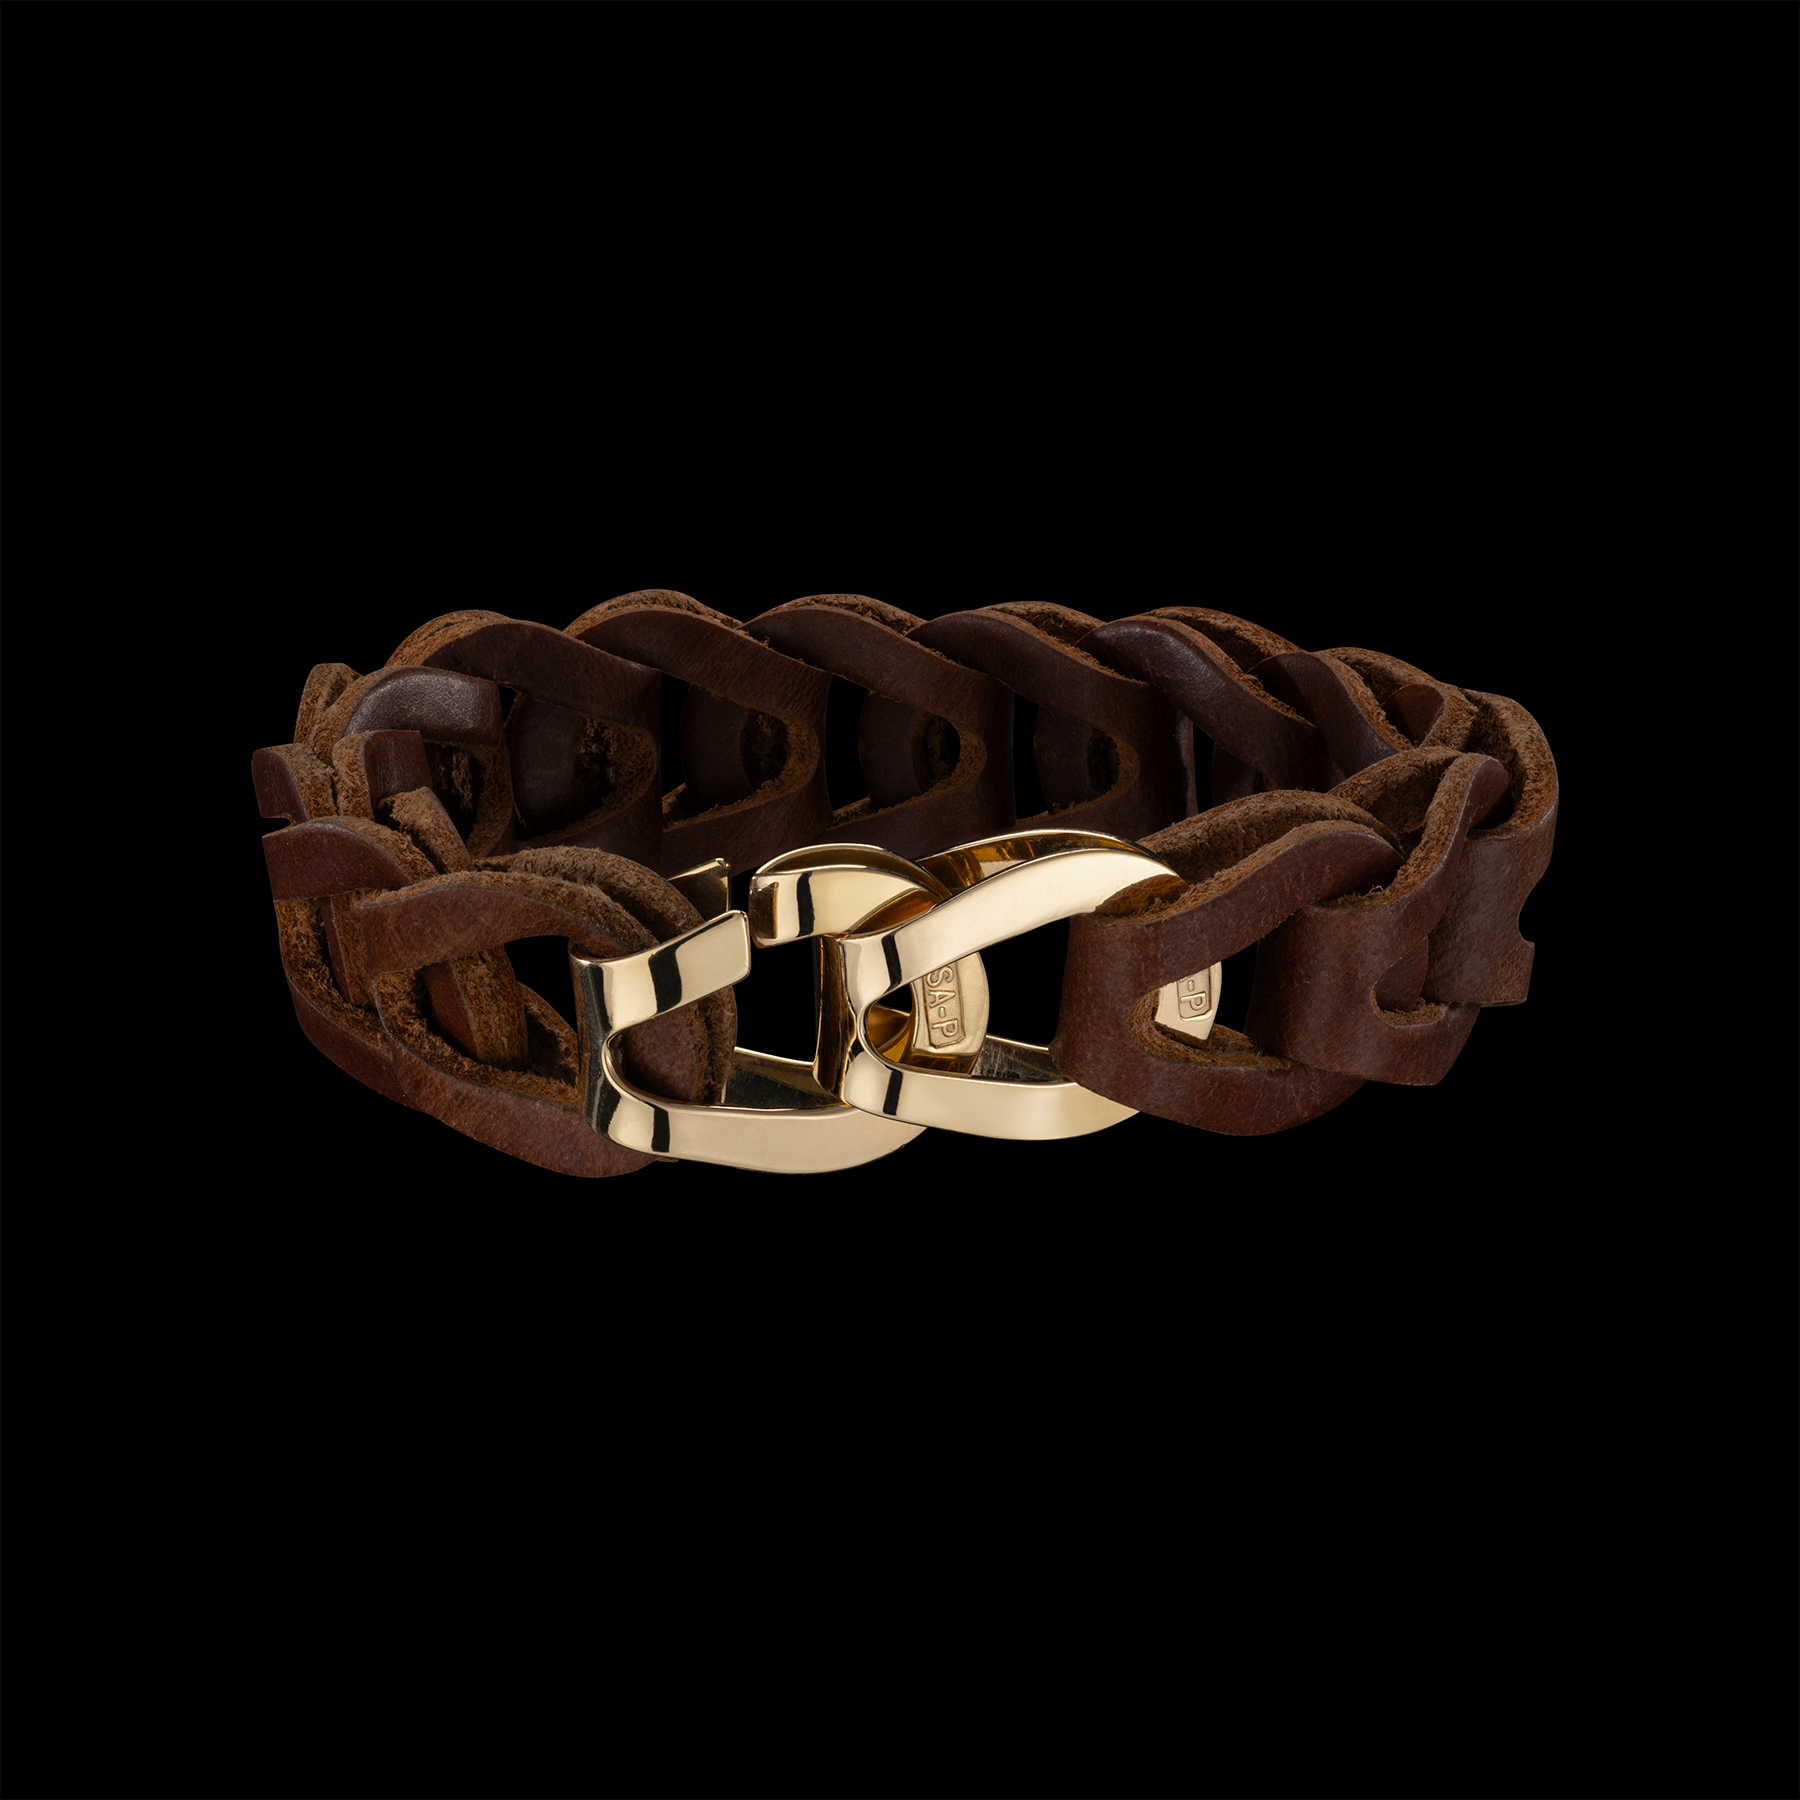 Gladiator bracelet by designer Solange Azagury-Partridge - Leather and 18 carat gold - front view